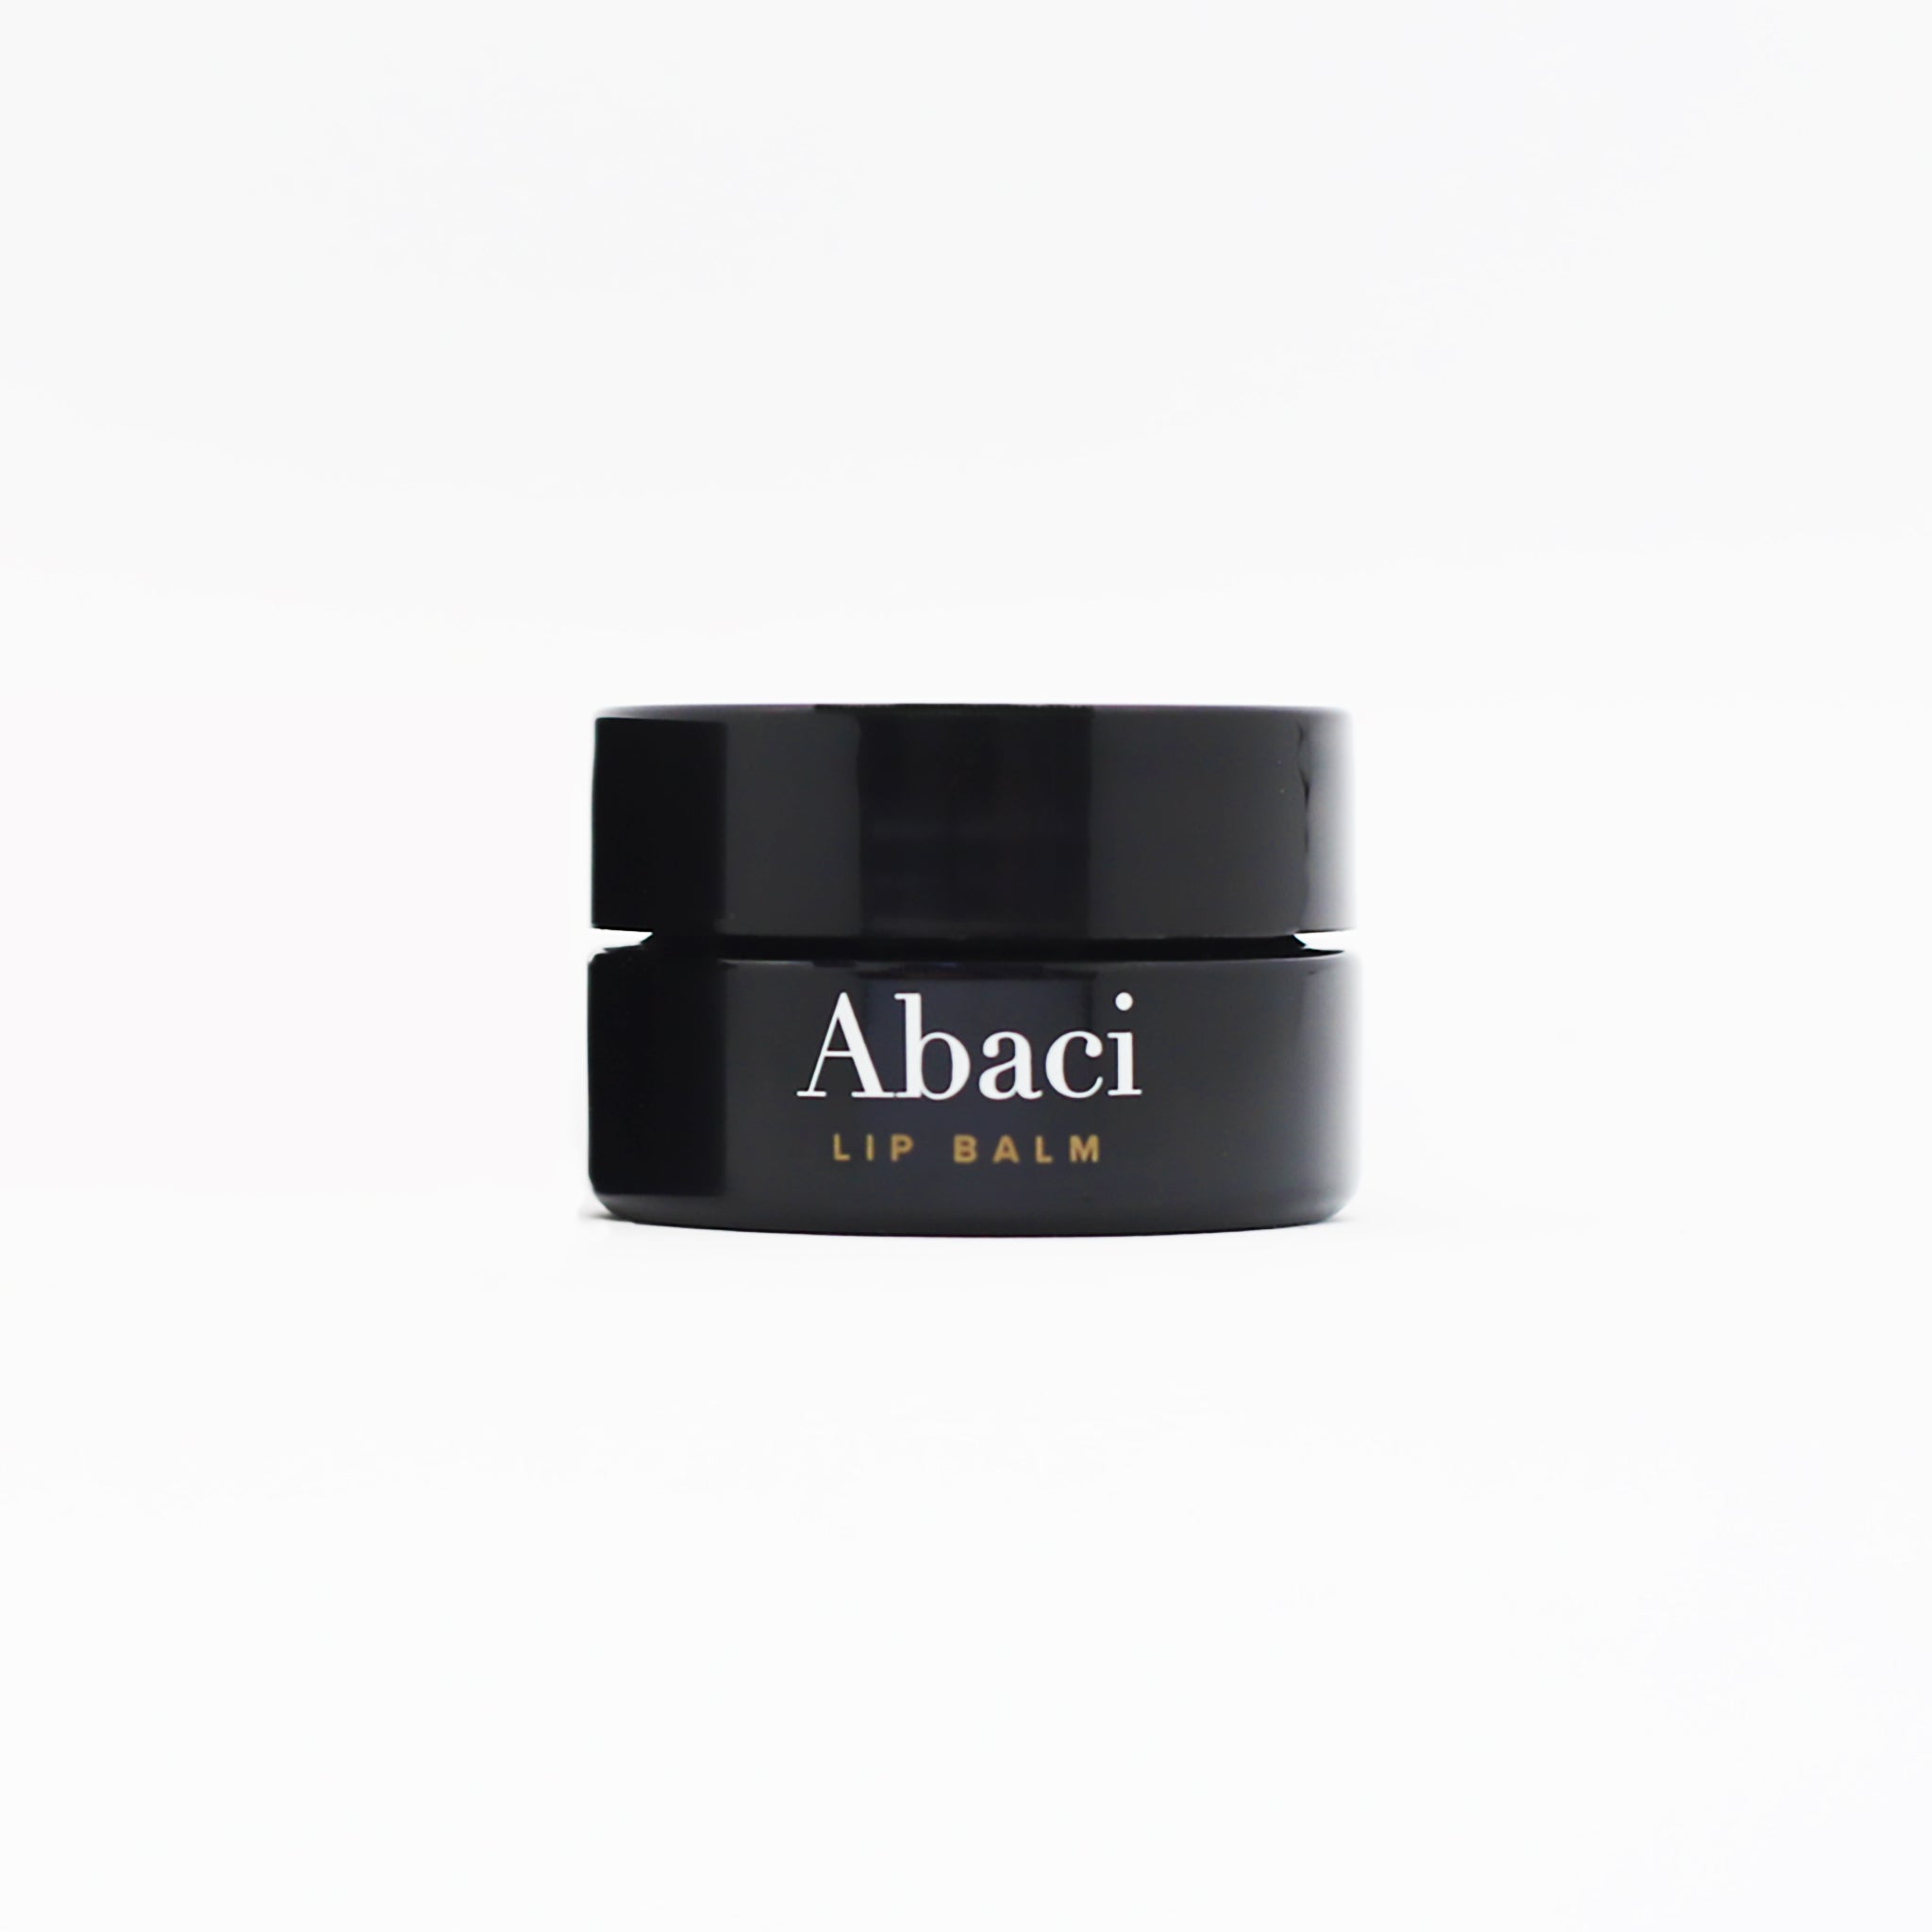 Abaci Lip Balm - Blend of organic ingredients and hyaluronic acid - 15ml black jar